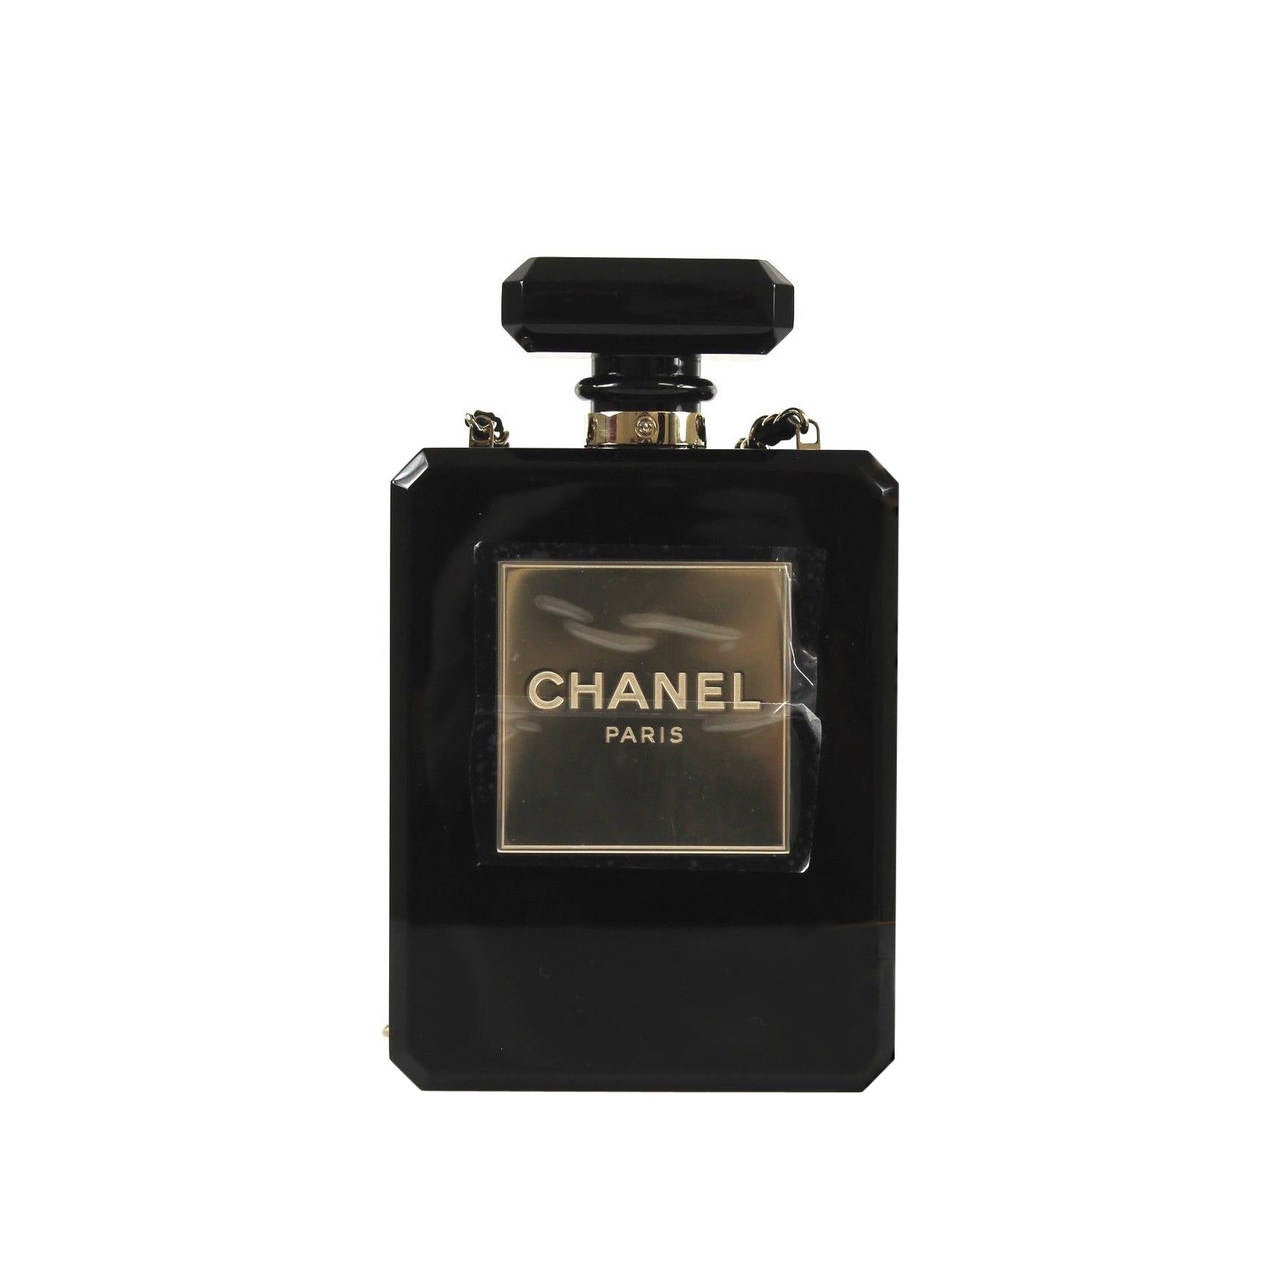 Chanel Black Plexiglass Limited Edition 2014 Perfume Bottle